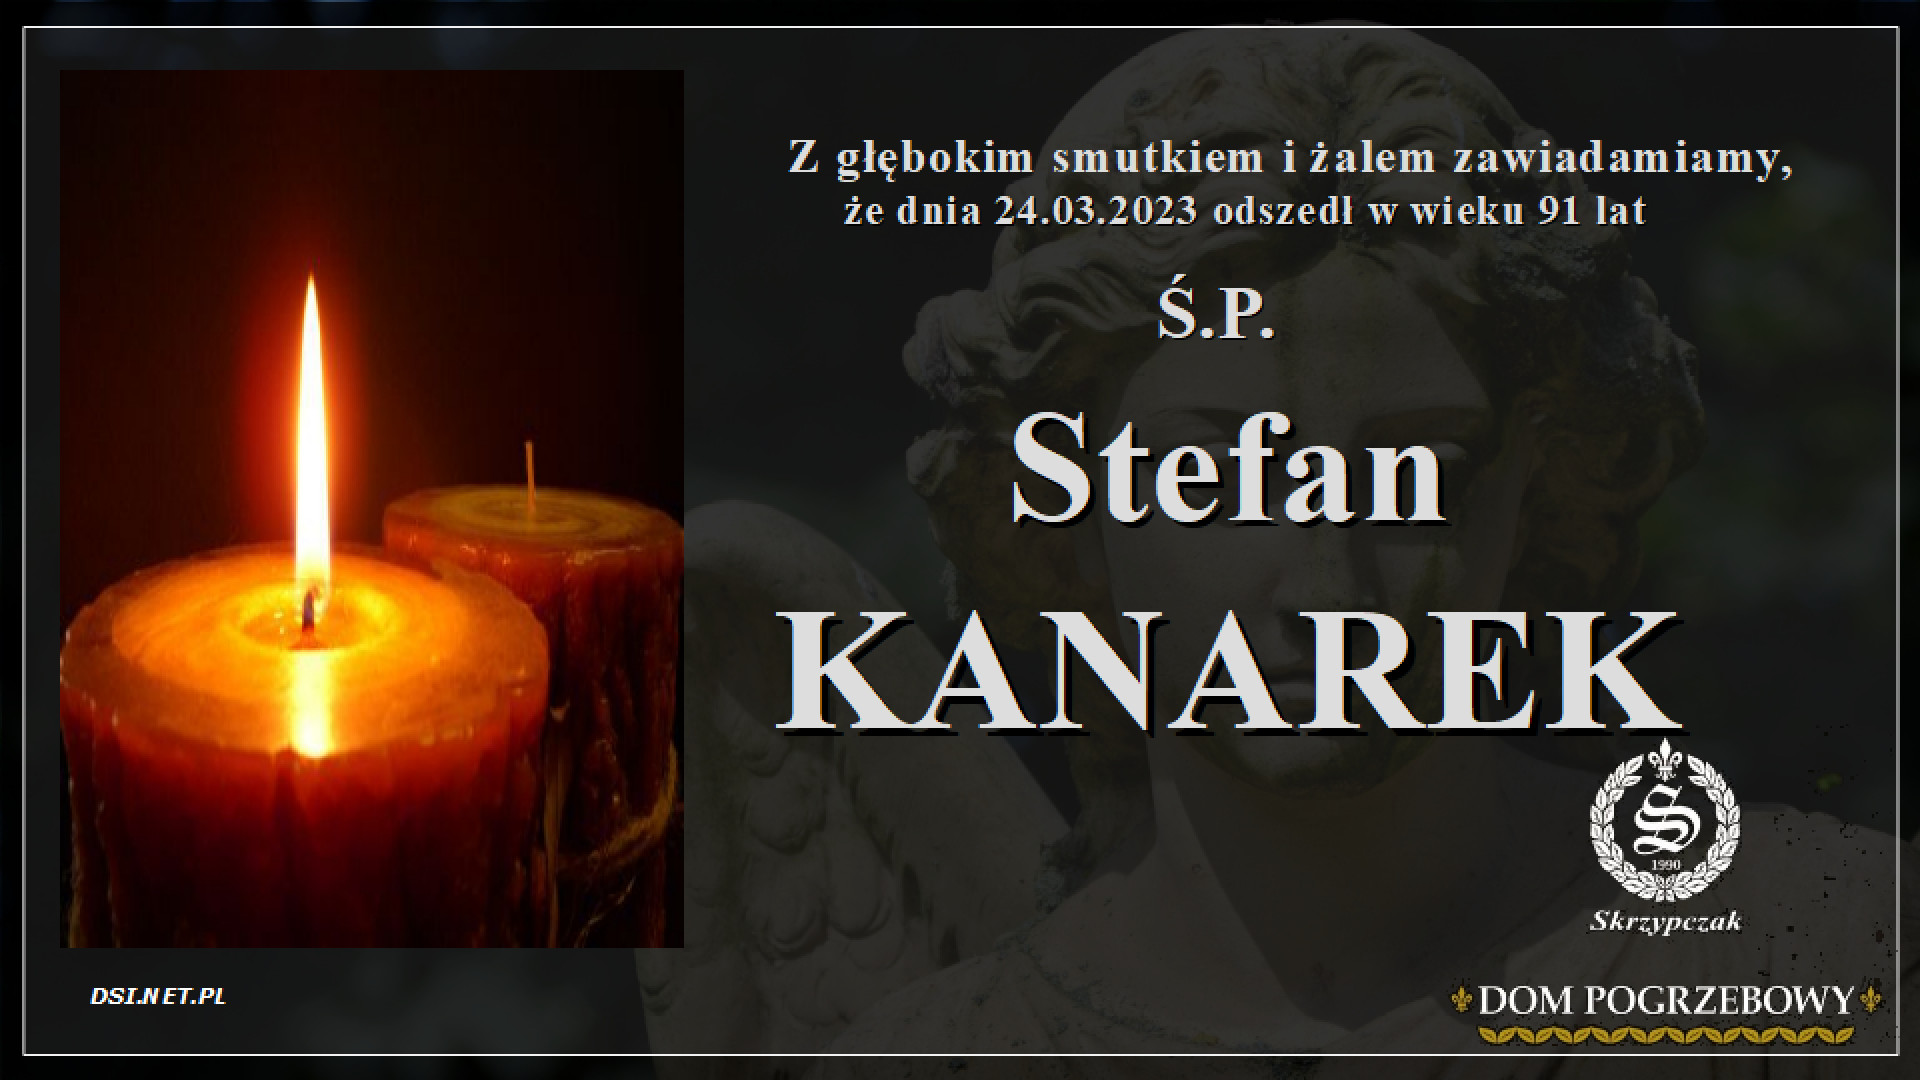 Ś.P. Stefan Kanarek